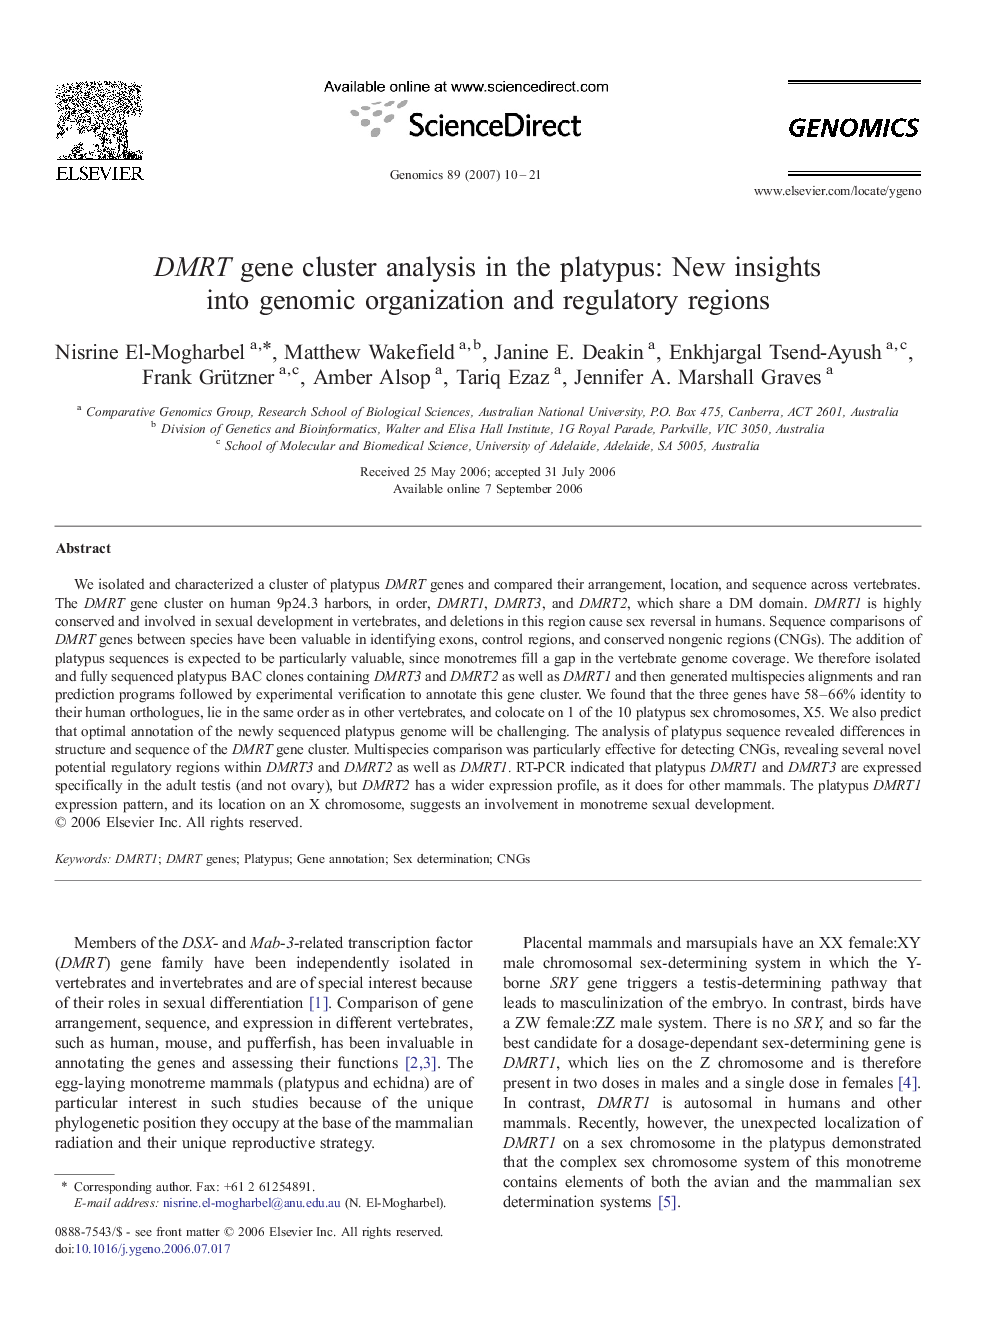 DMRT gene cluster analysis in the platypus: New insights into genomic organization and regulatory regions